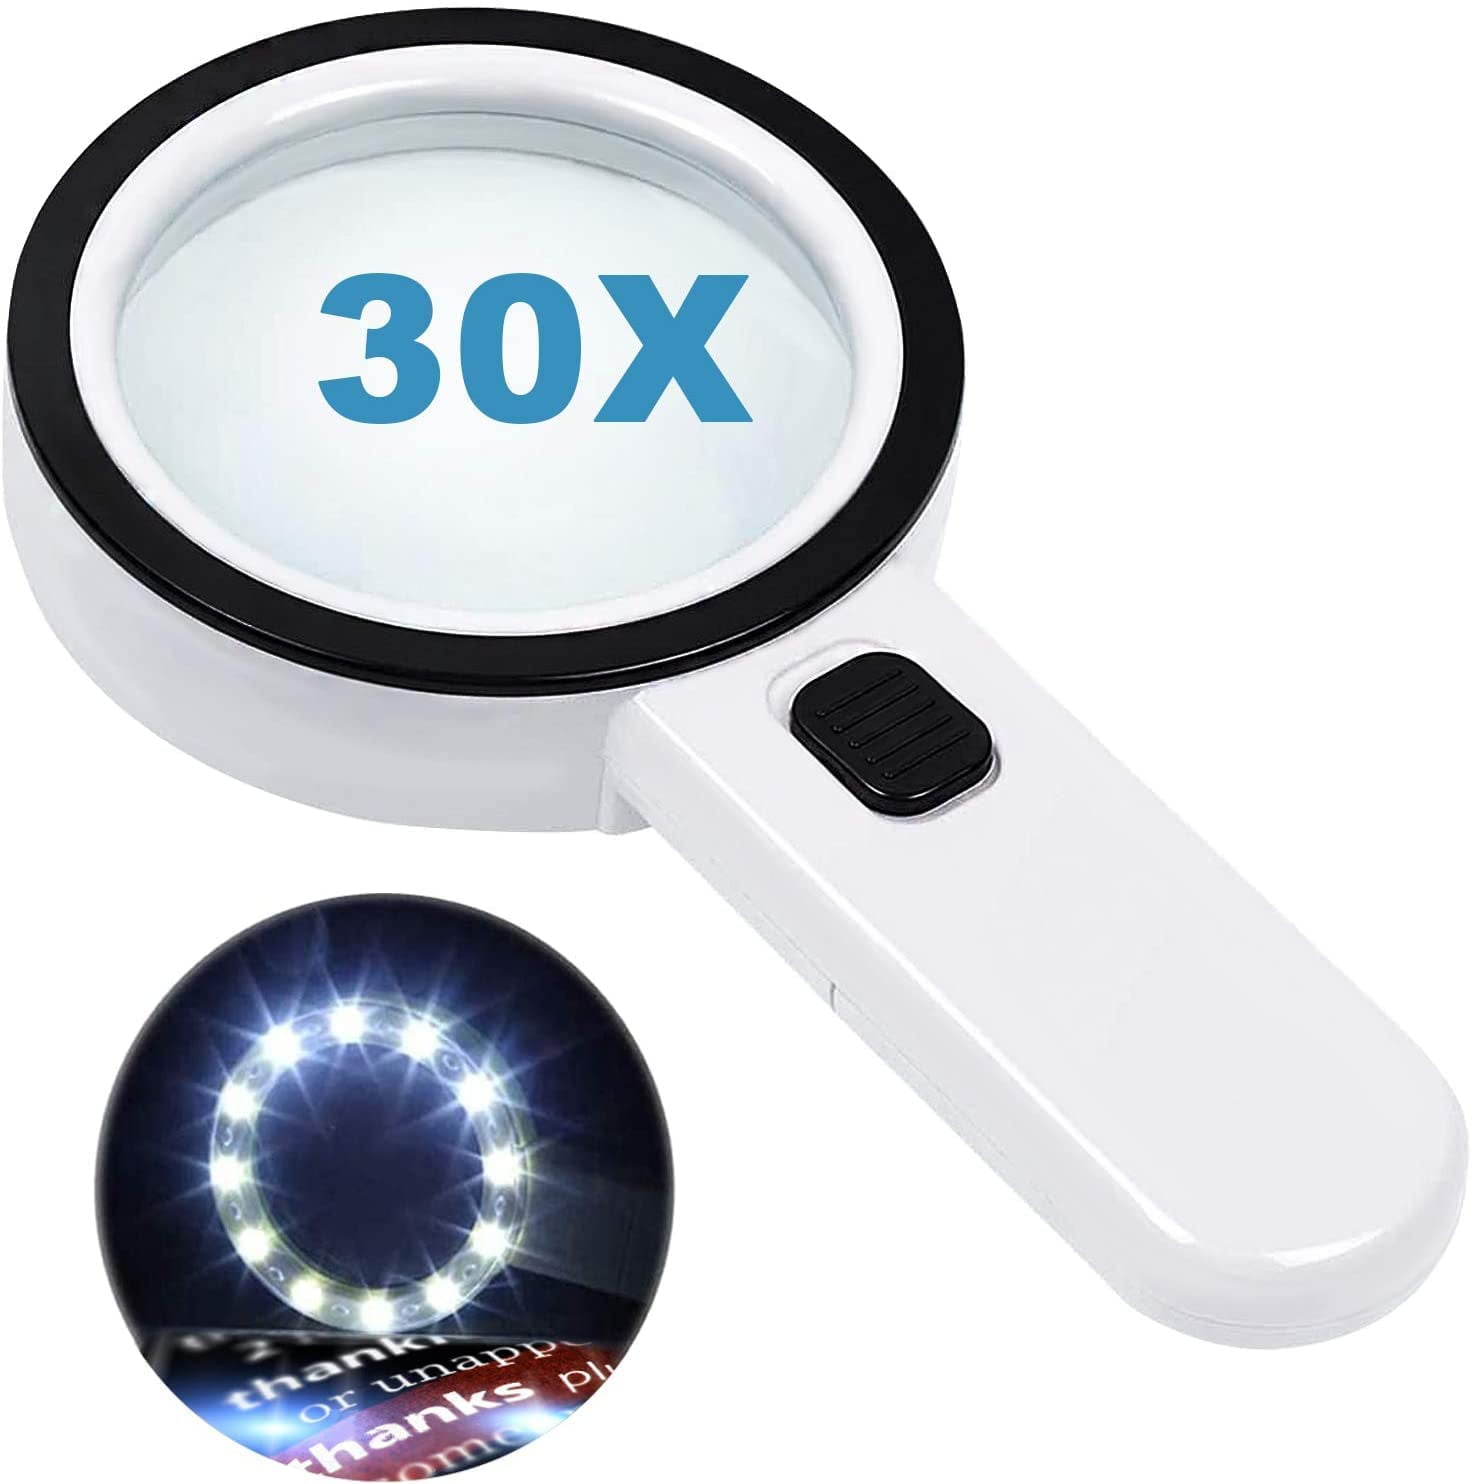 TMANGO Magnifying Glass with Light, 30X Handheld Large Magnifying Glass 12  LED Lighted Magnifier for Macular Degeneration, Seniors Reading, Soldering